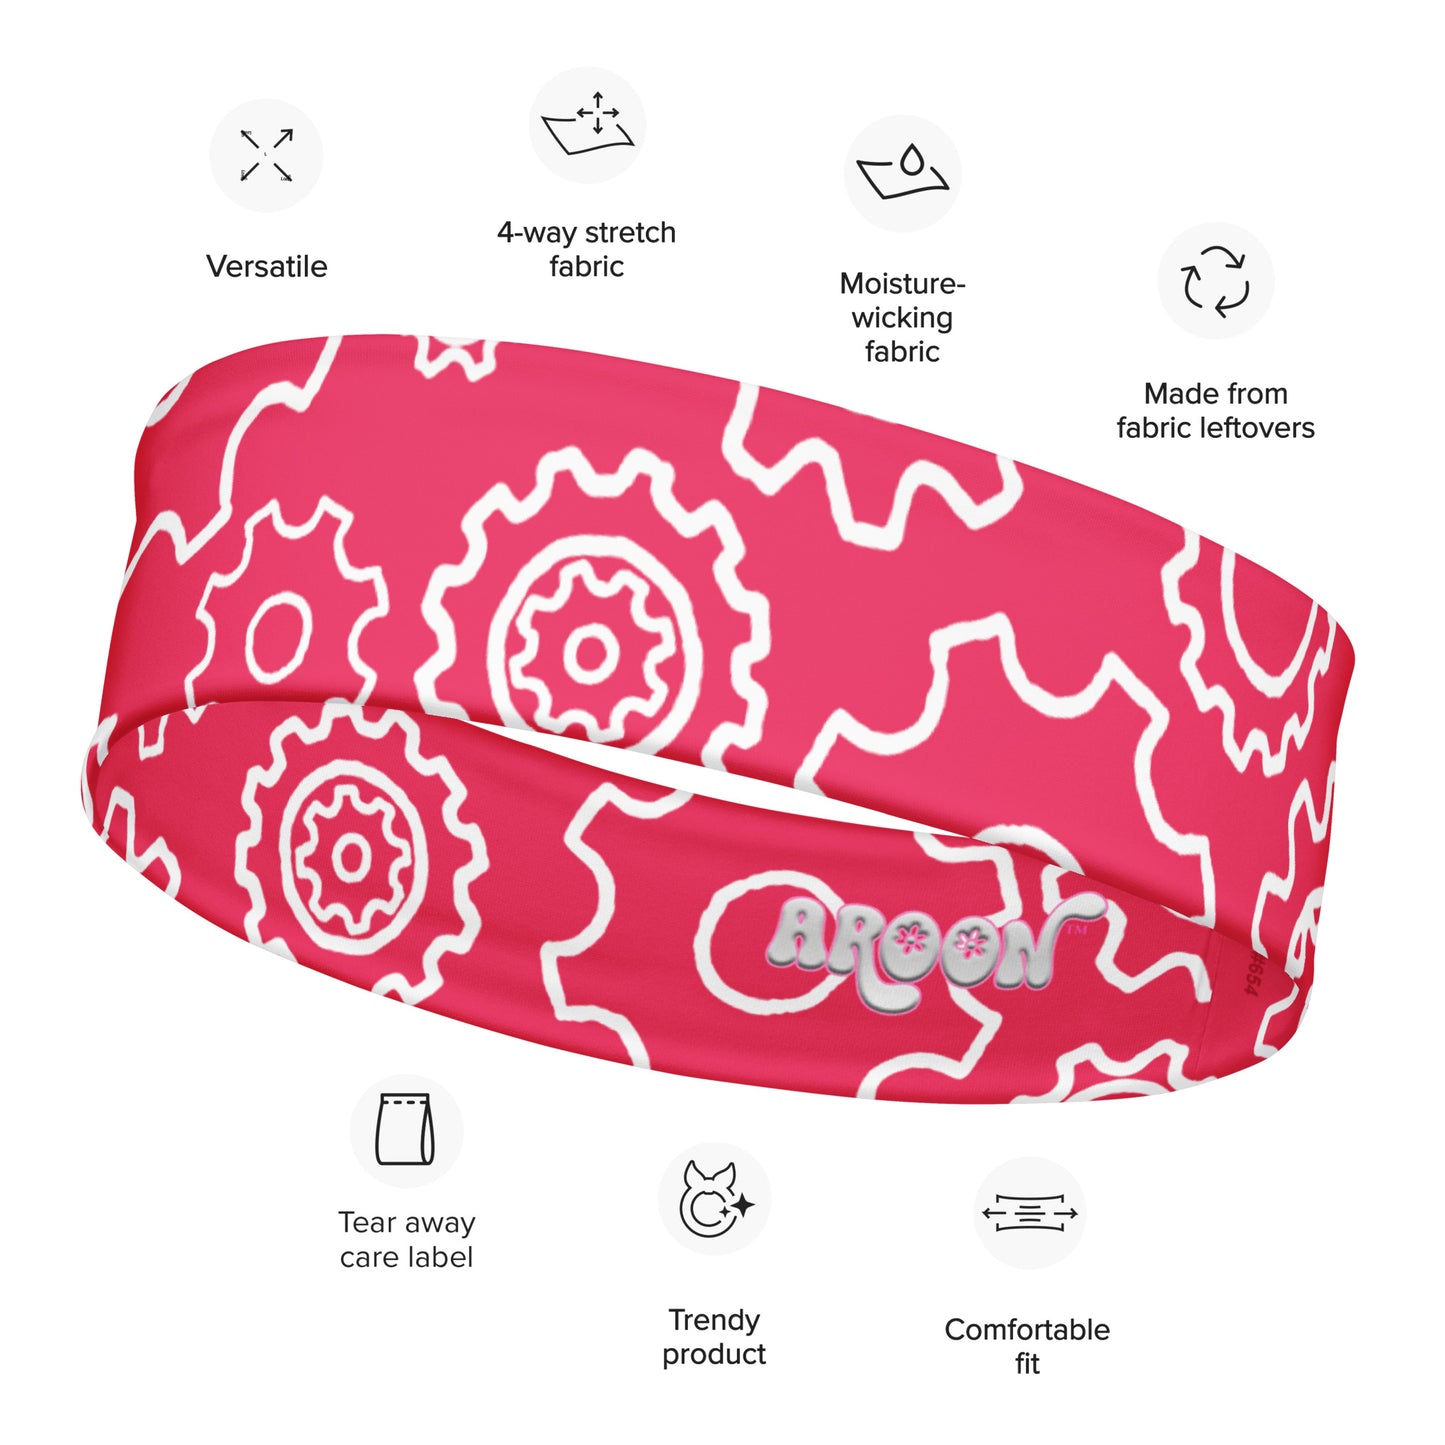 Pink and White Gears Original Art Headband Design